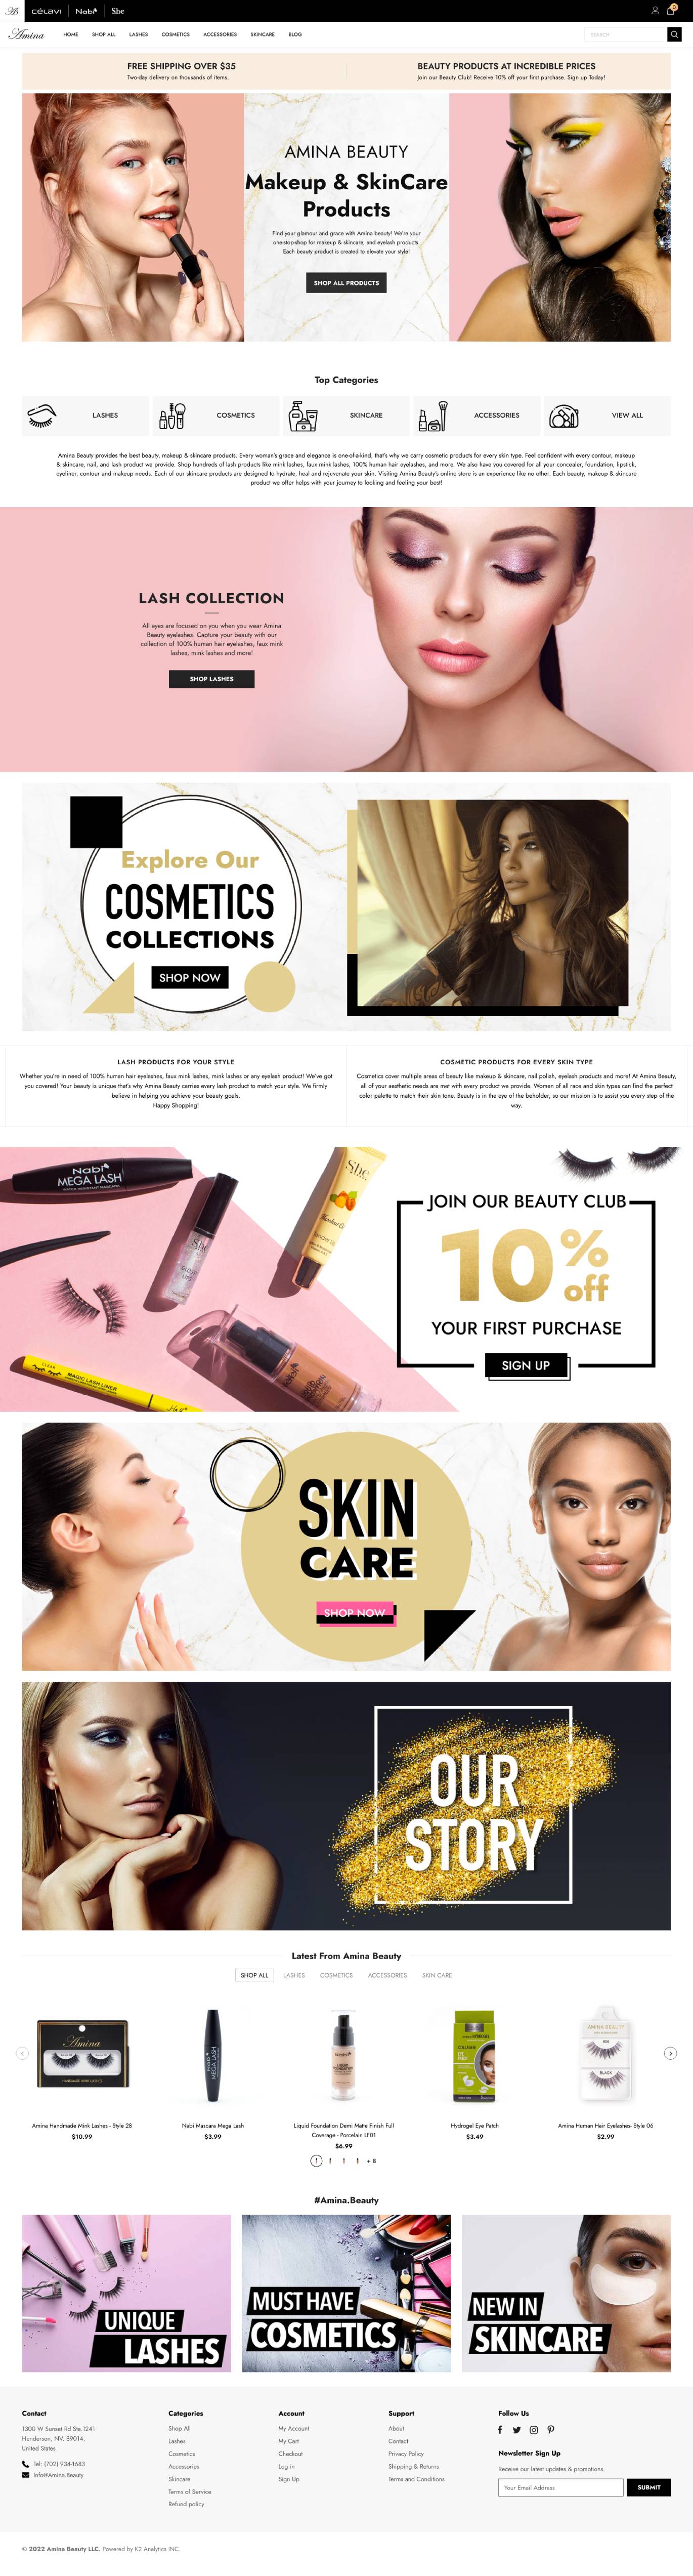 Makeup & Skincare Products E-Commerce & Website Design